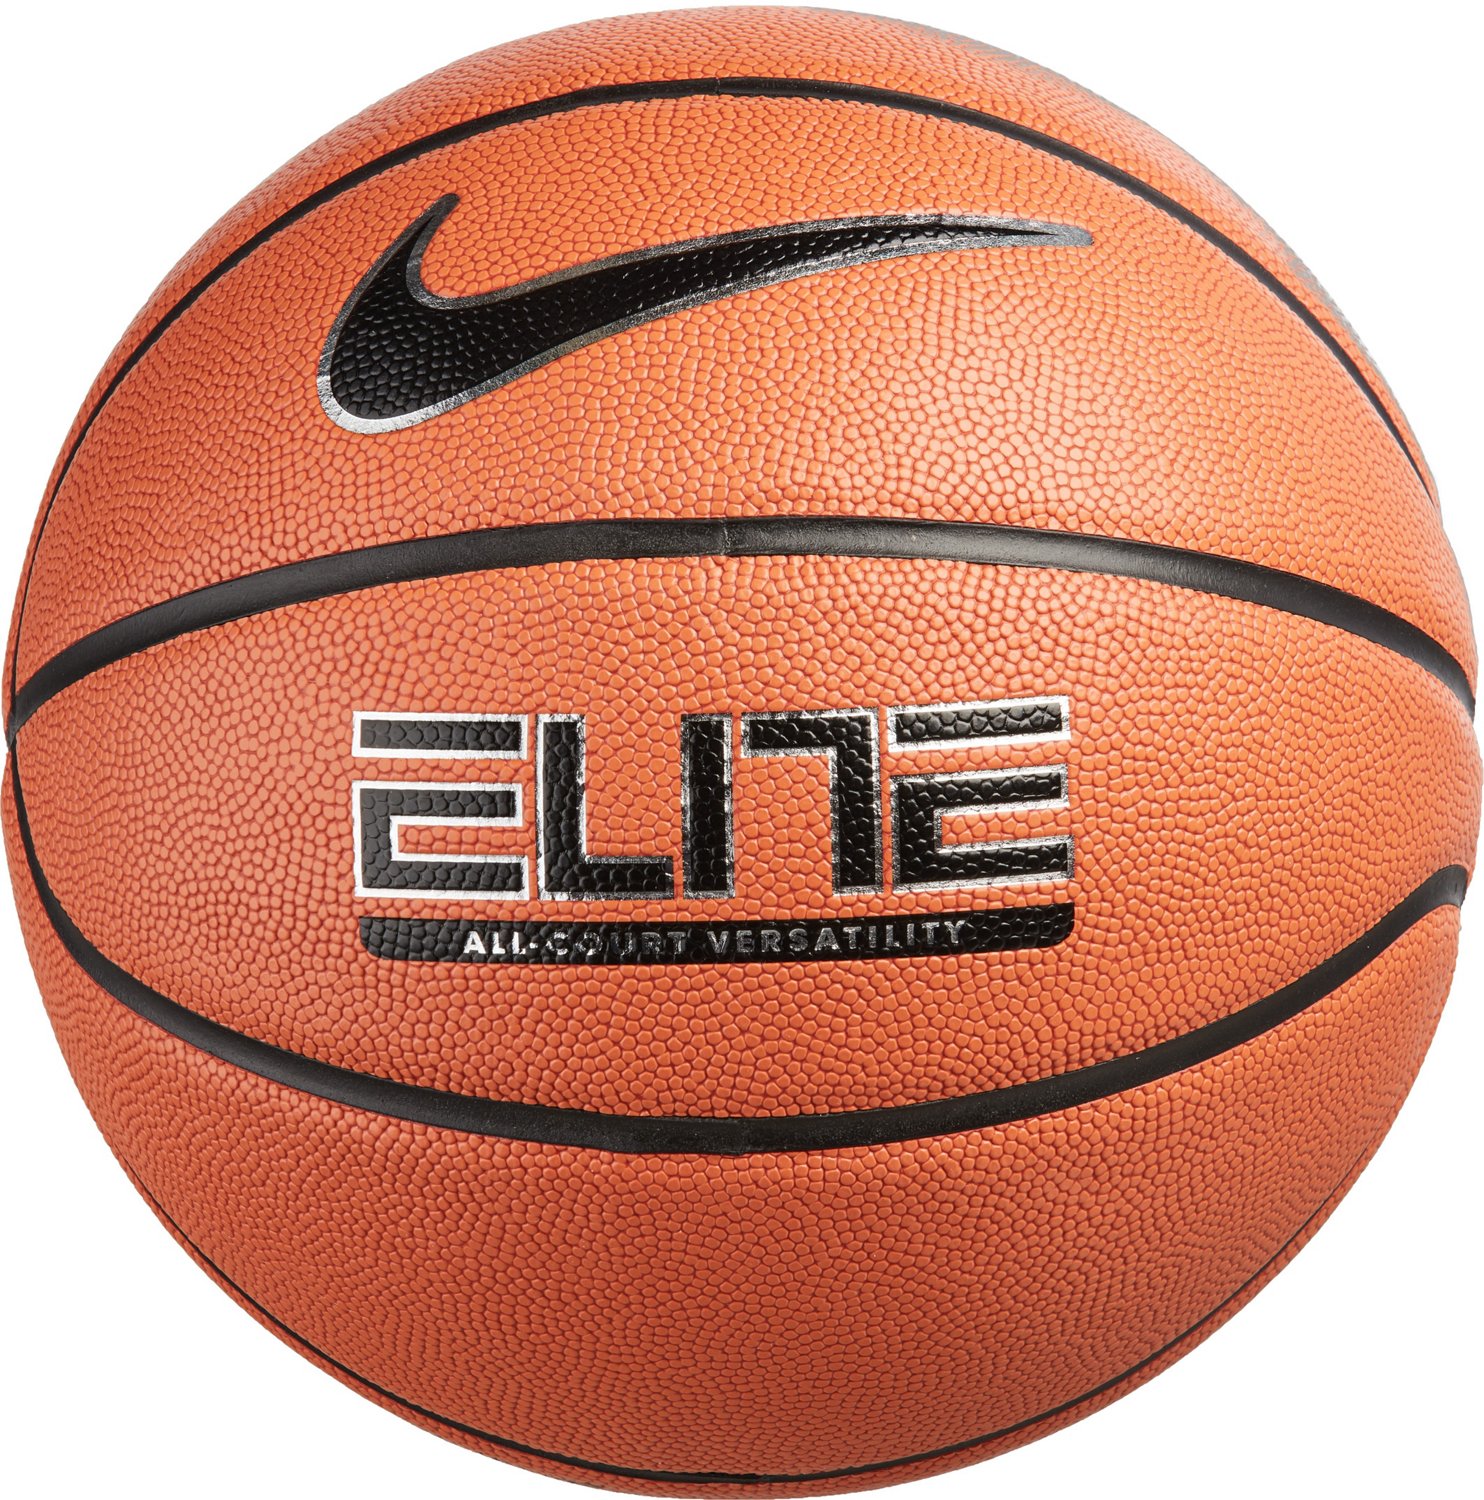 nike elite all court versatility basketball